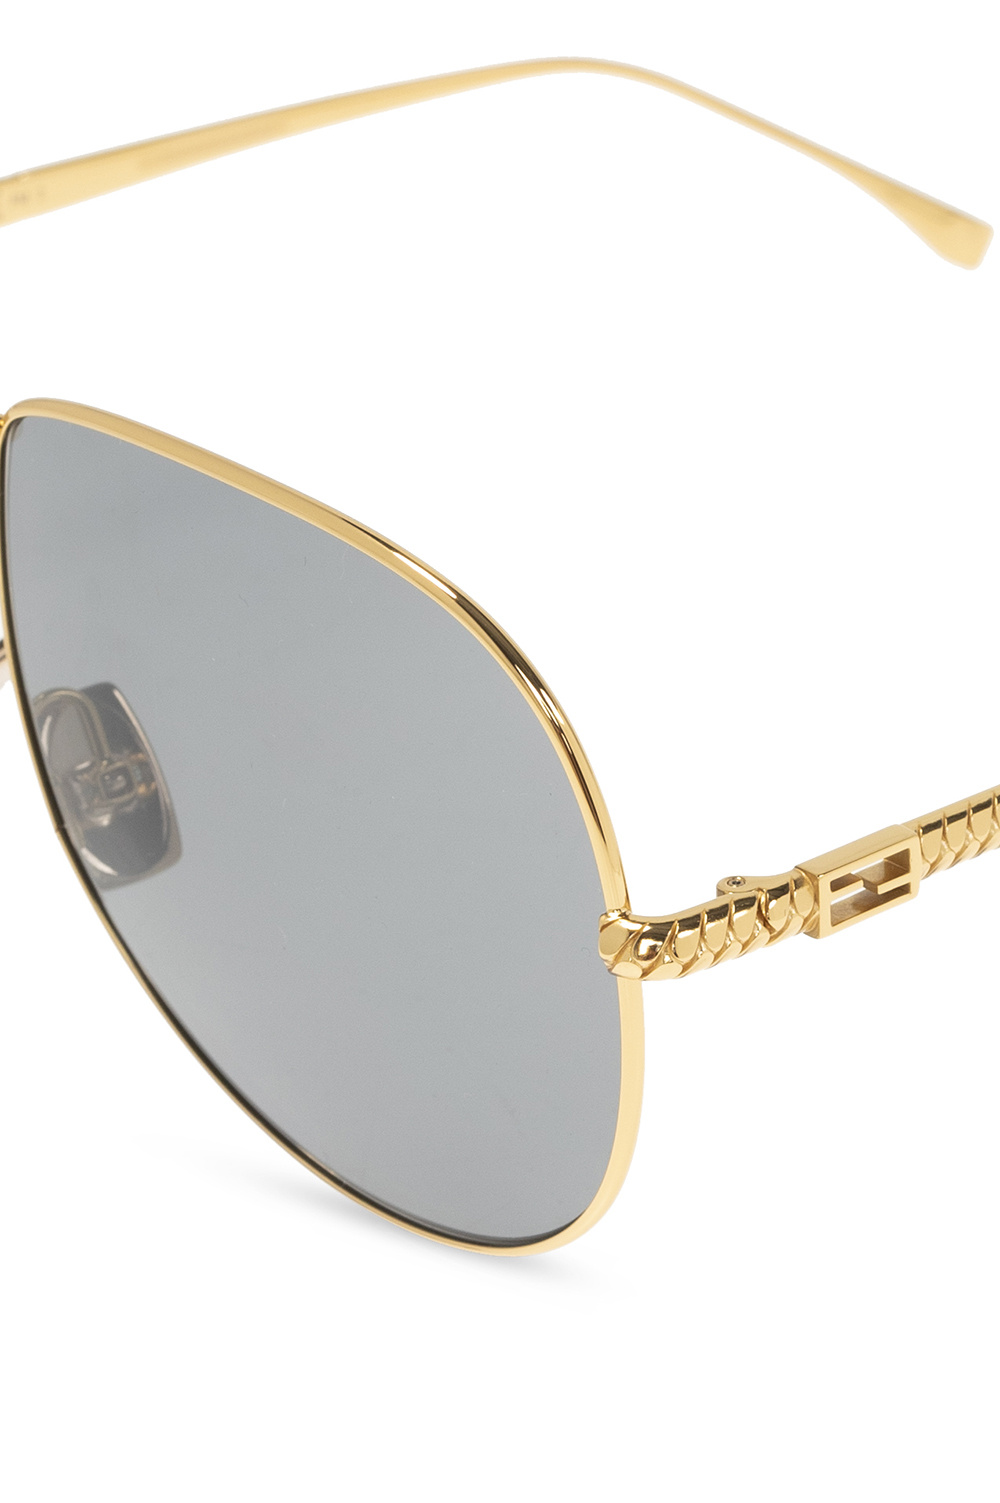 Fendi gucci eyewear grey tinted sunglasses